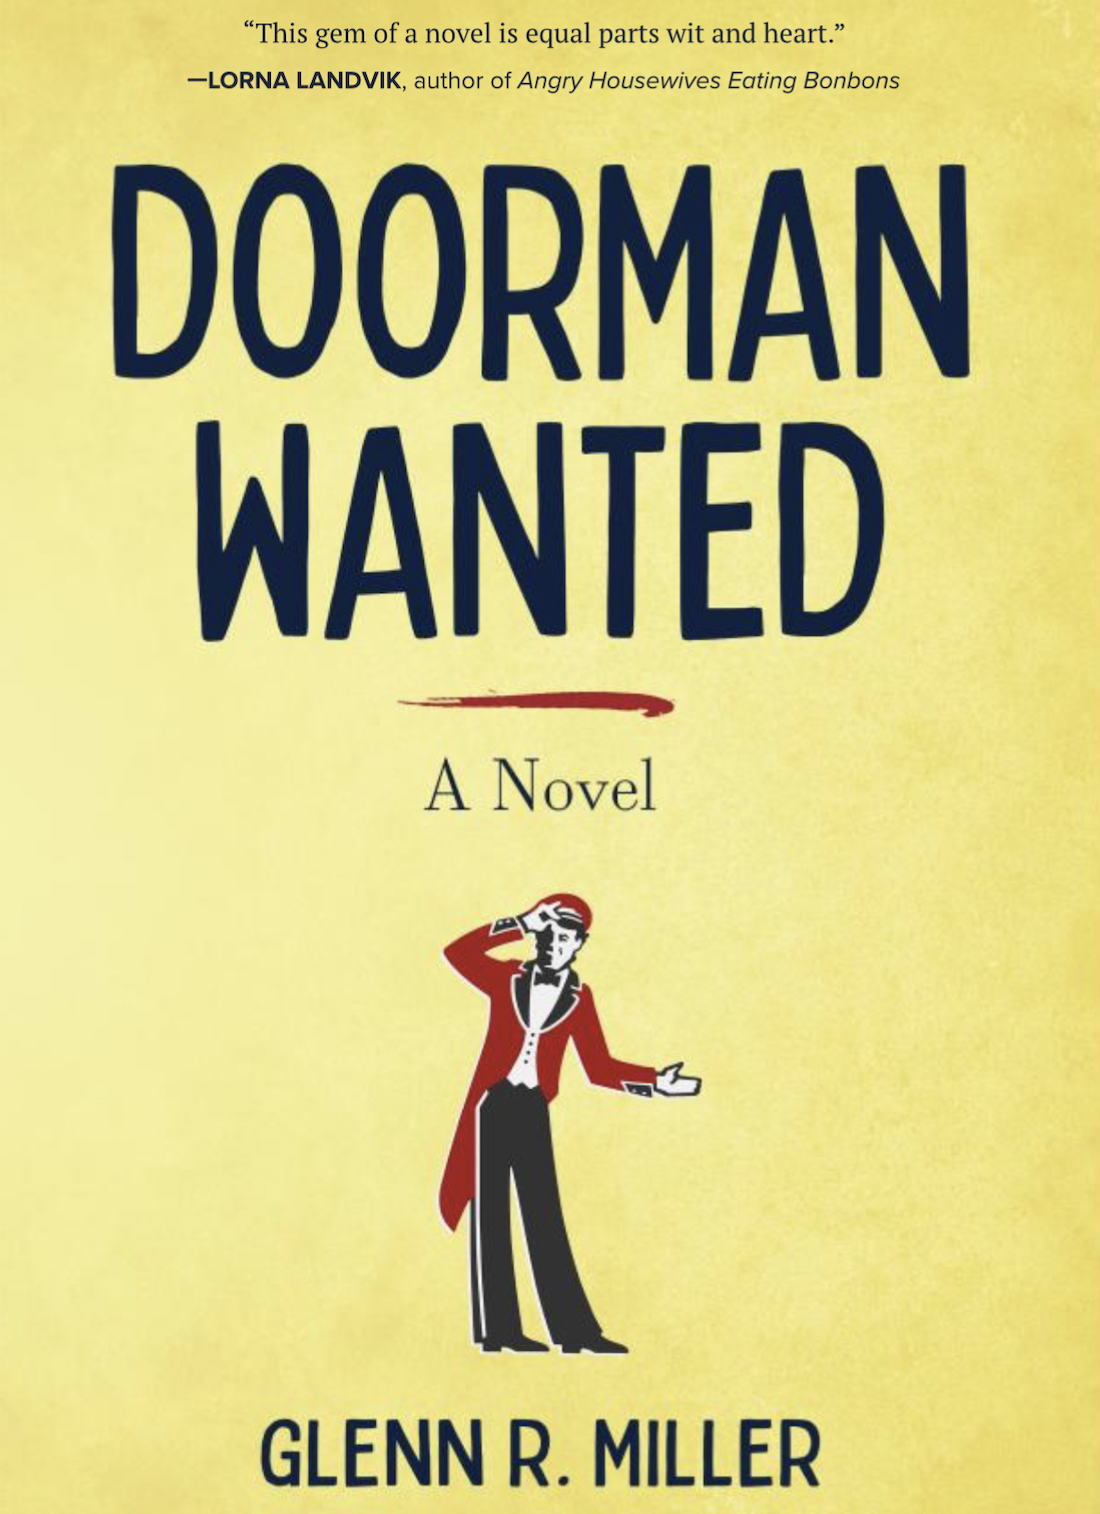 Doorman Wanted book jacket.